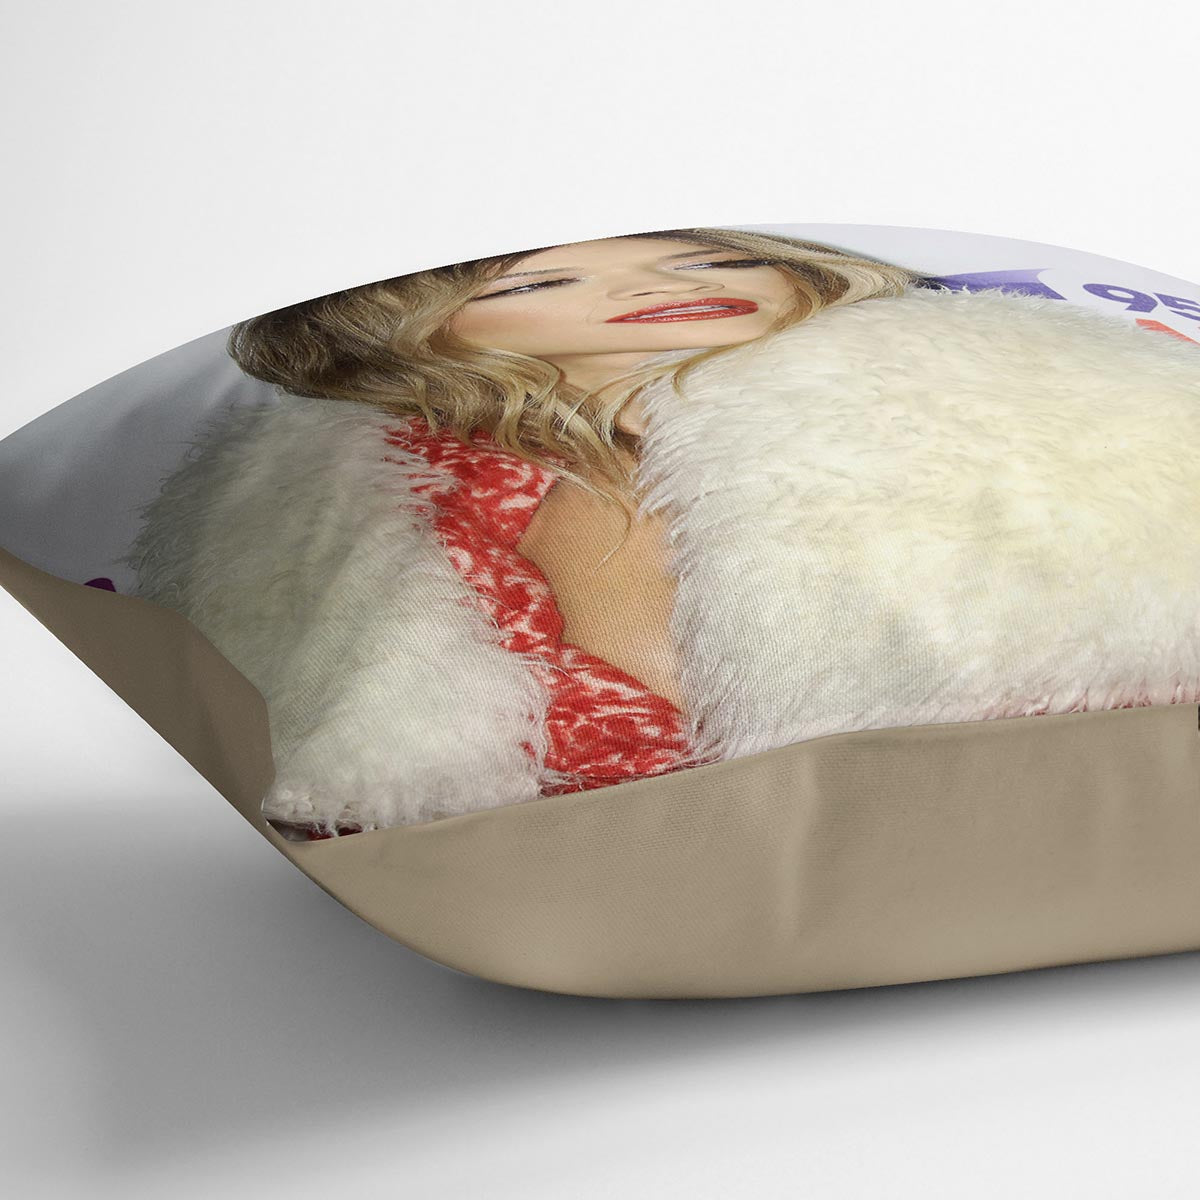 Rita Ora in red Cushion